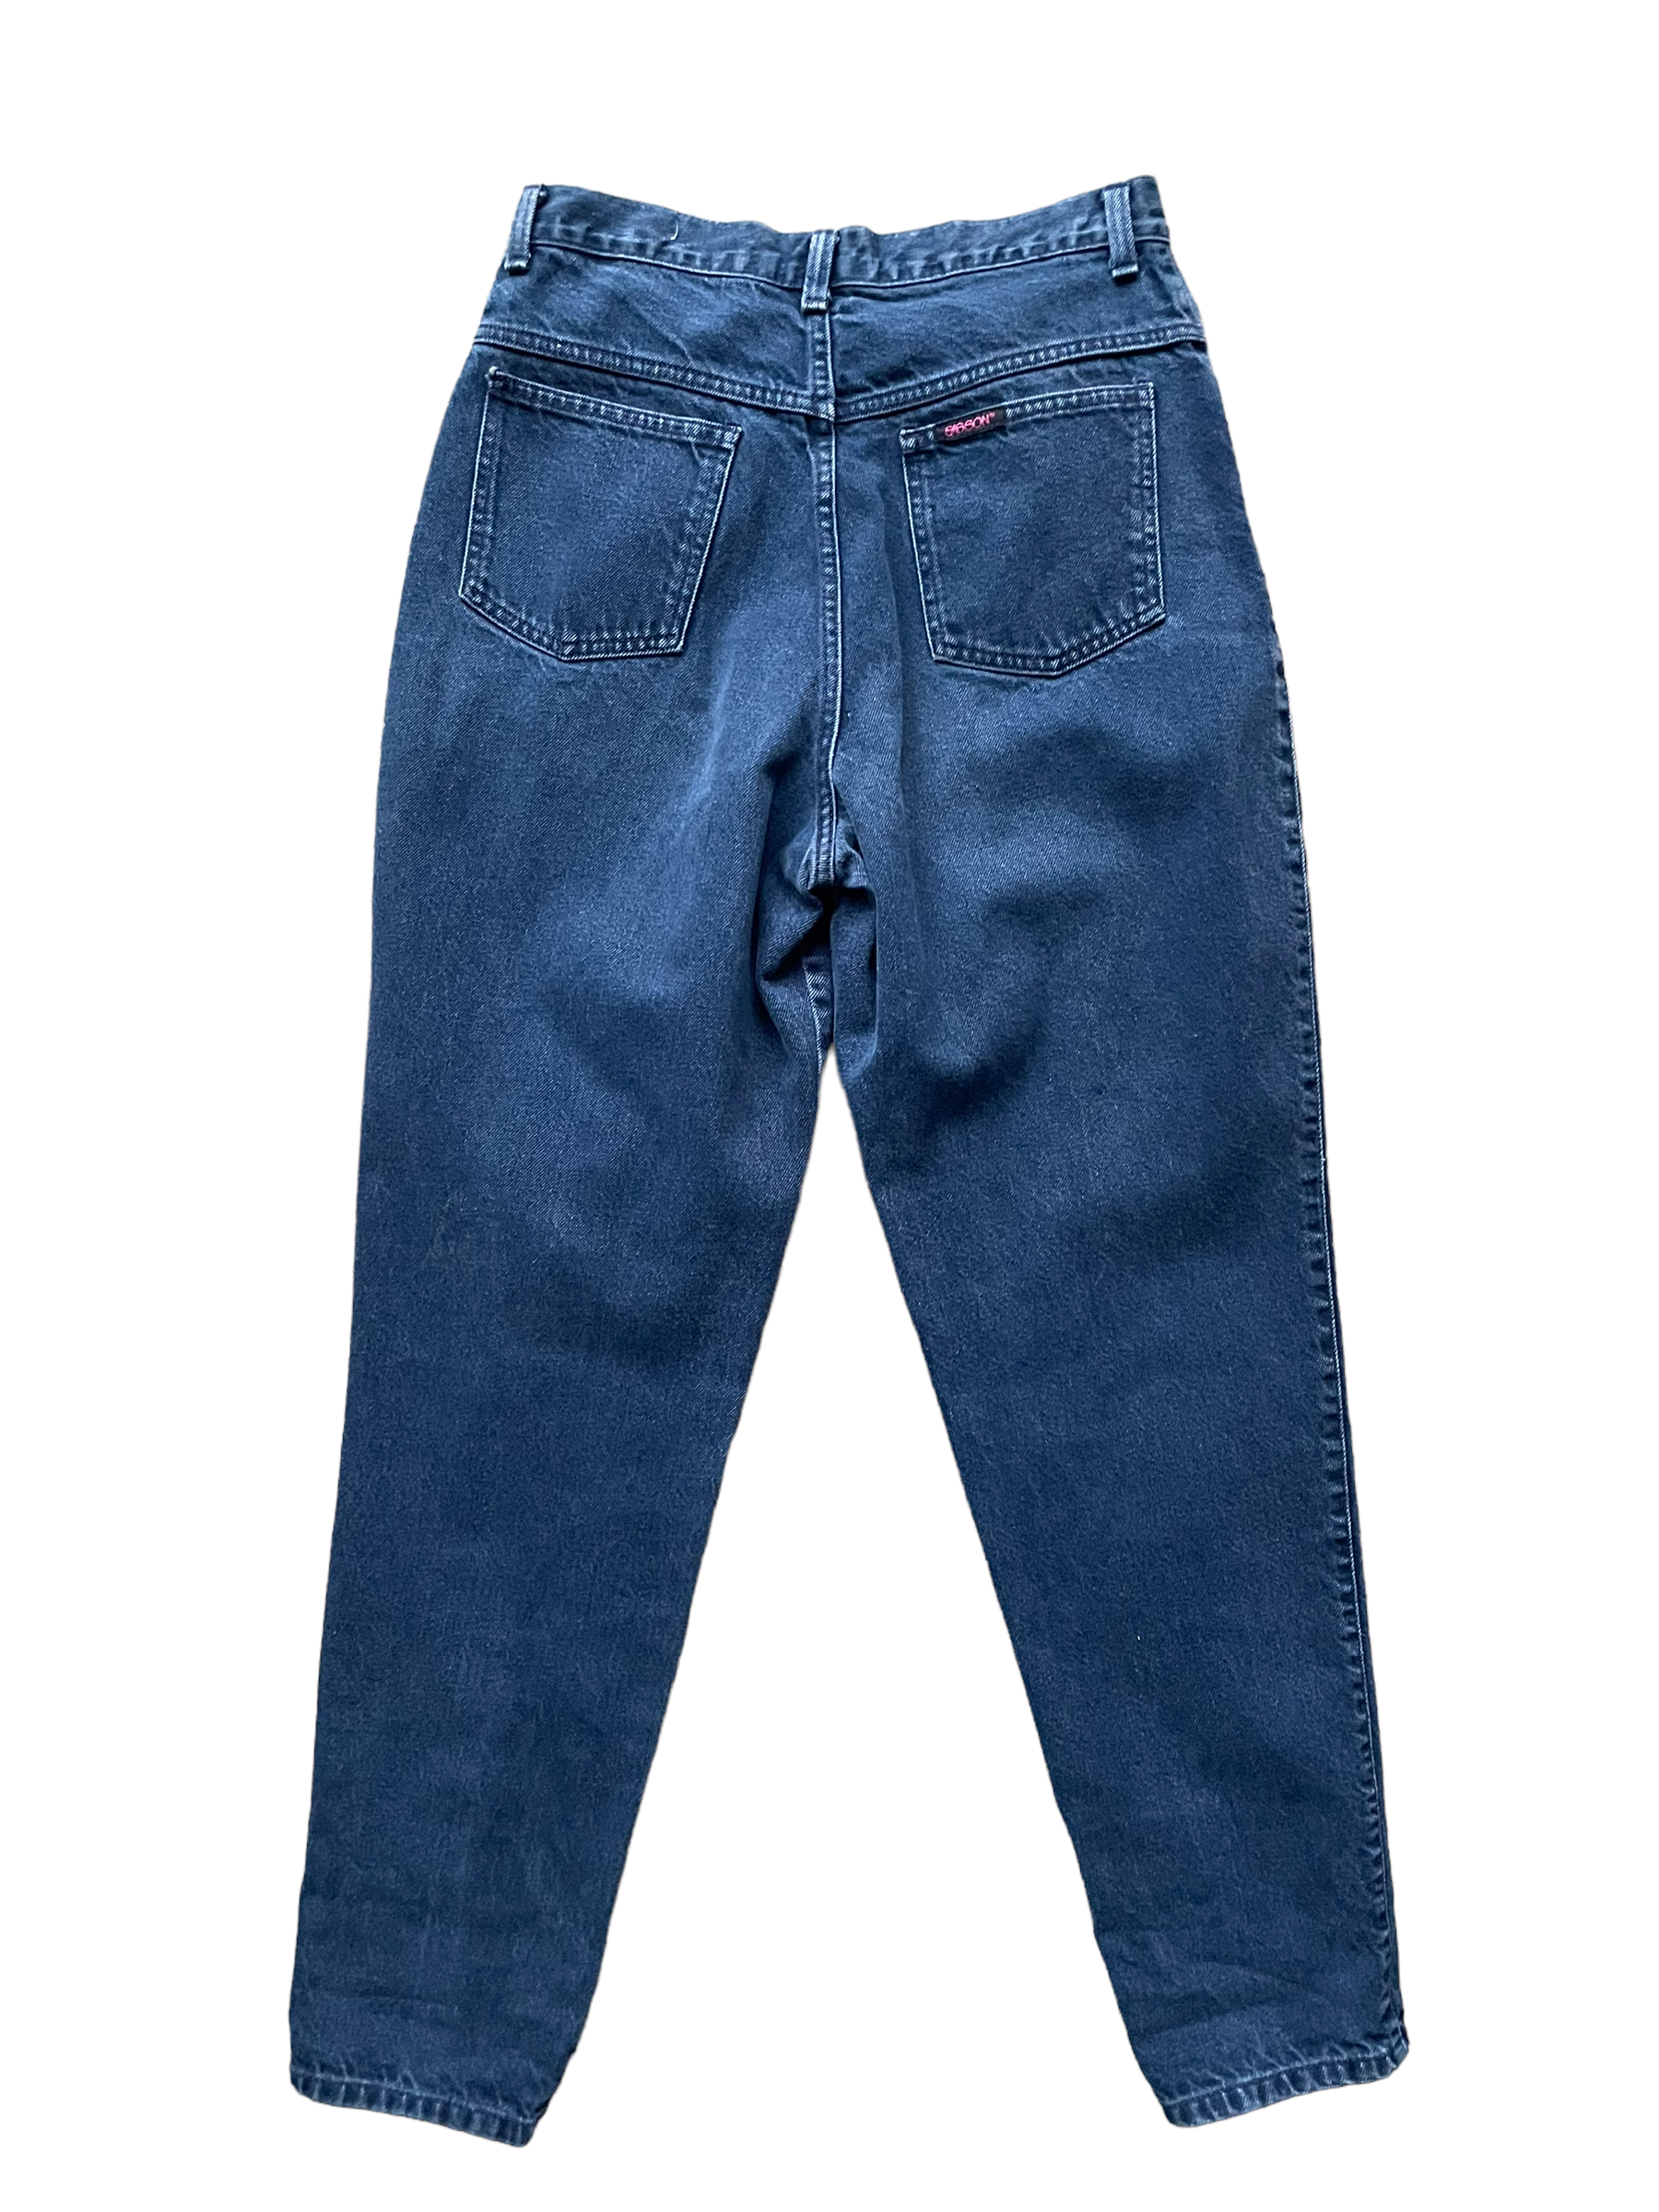 Full back view of Vintage 1980s Sasson Ladies Jeans | Barn Owl Seattle | Vintage Ladies Jeans and Pants